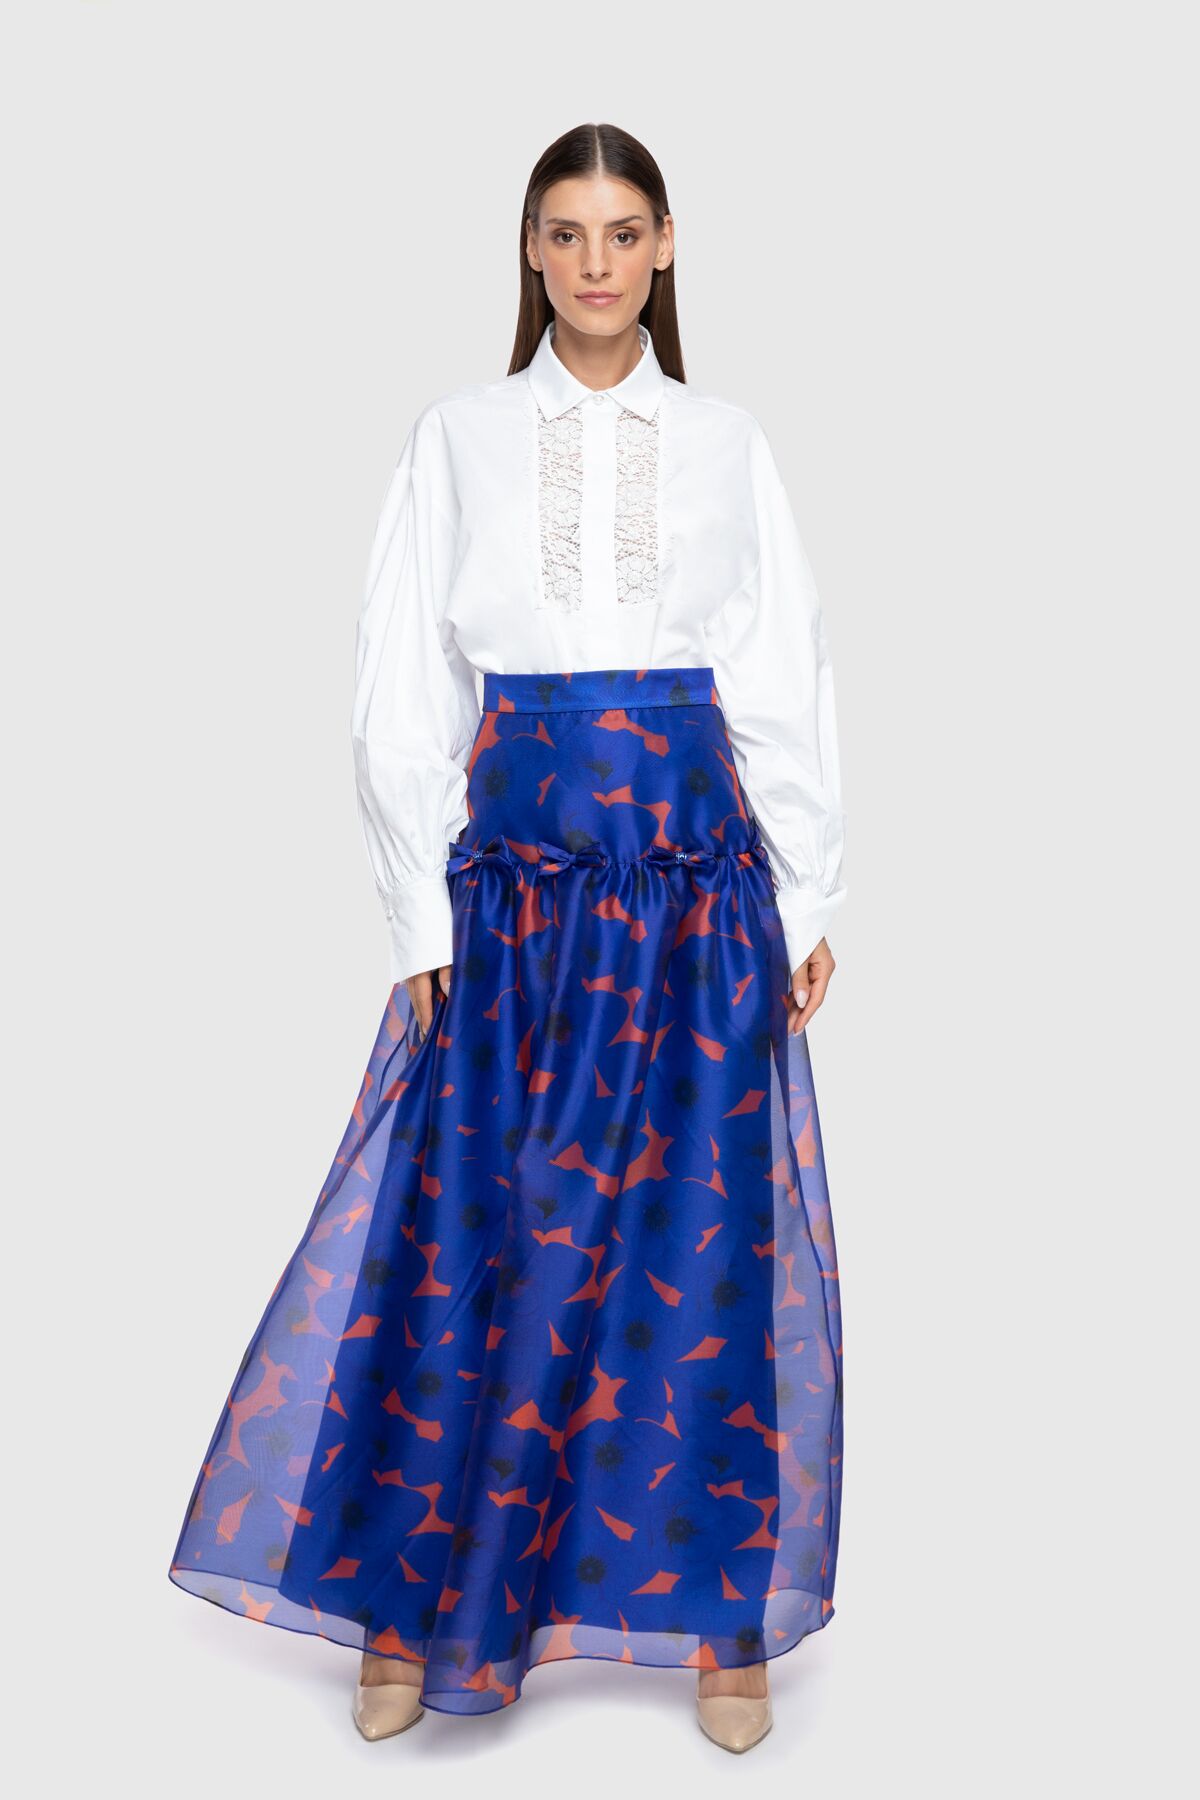  GIZIA - Patterned Long Navy Blue Skirt